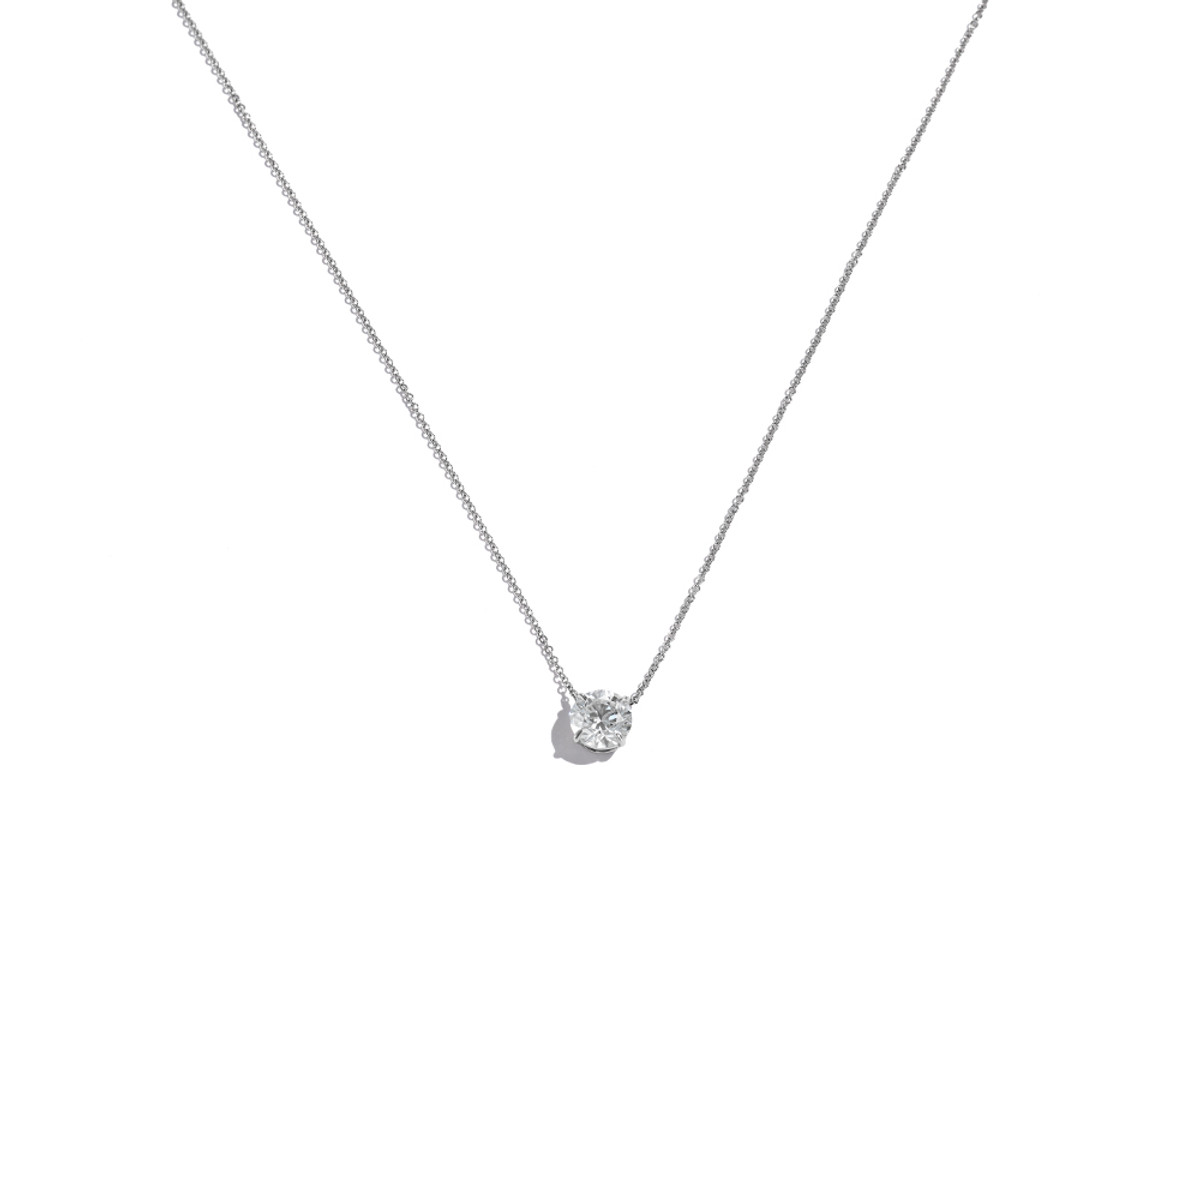 Hyde Park 18k White Gold 1.54 CT Diamond Pendant Necklace-36931